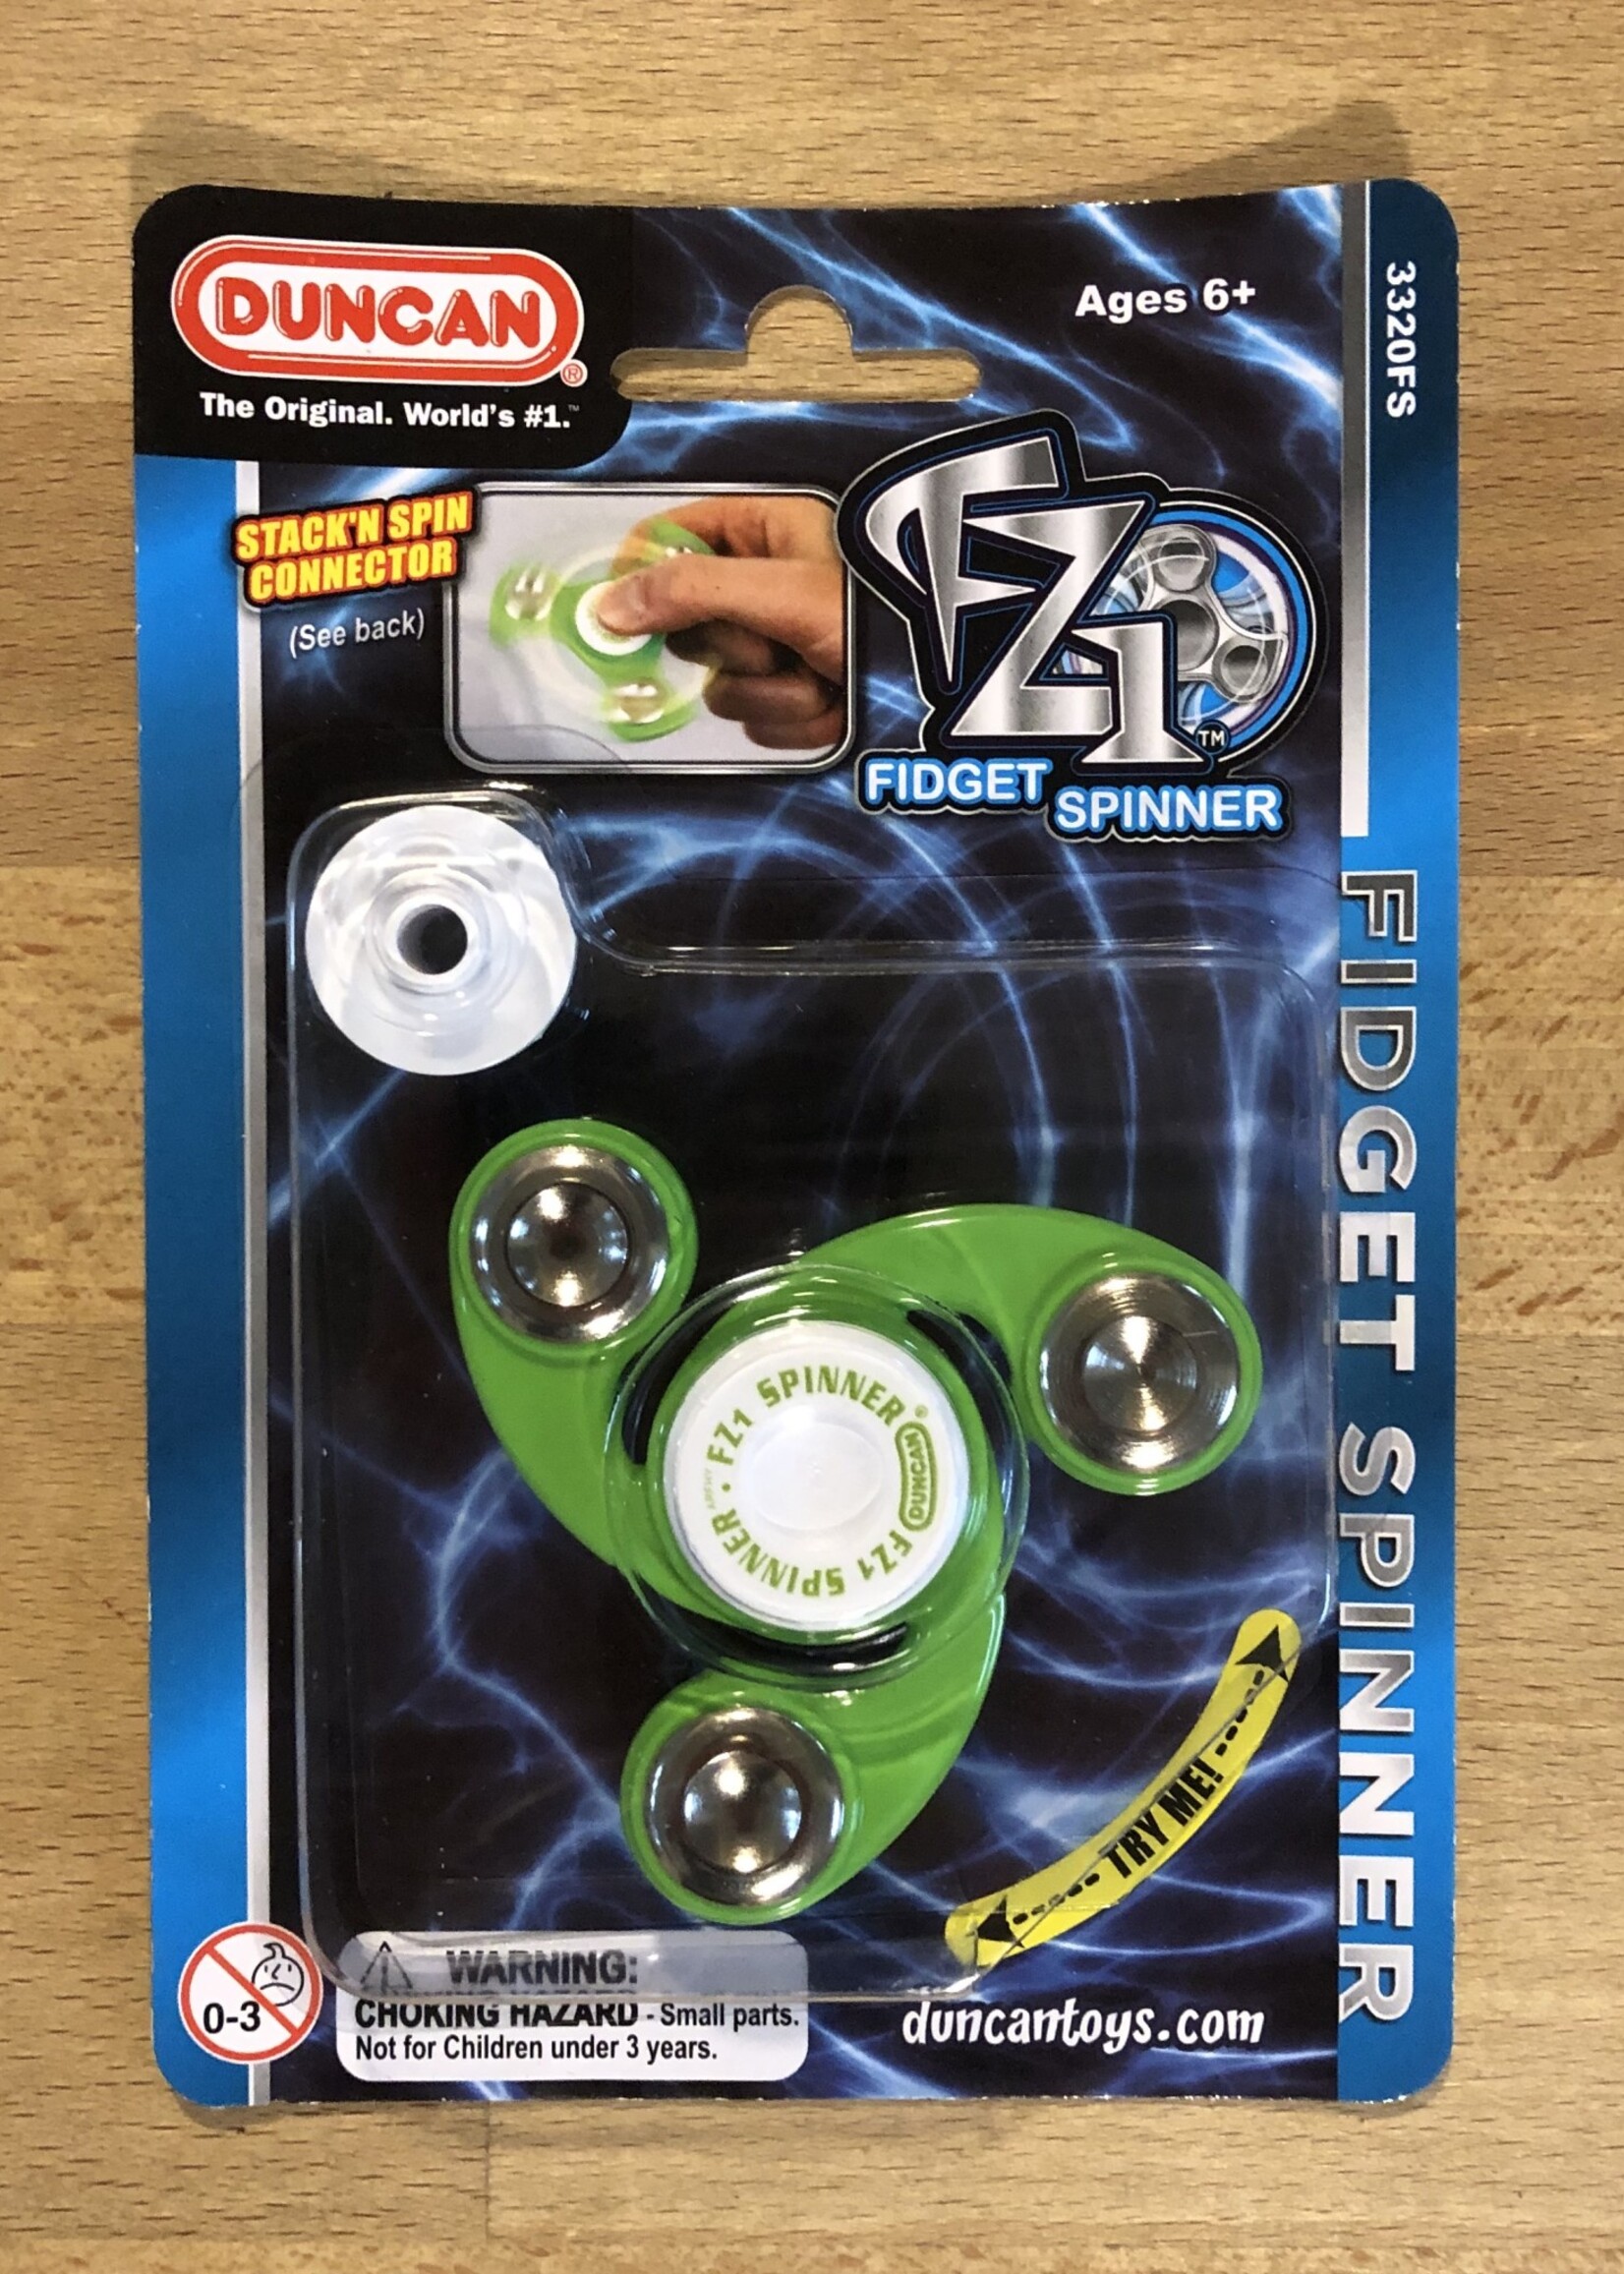 FZ-1 Fidget Spinner